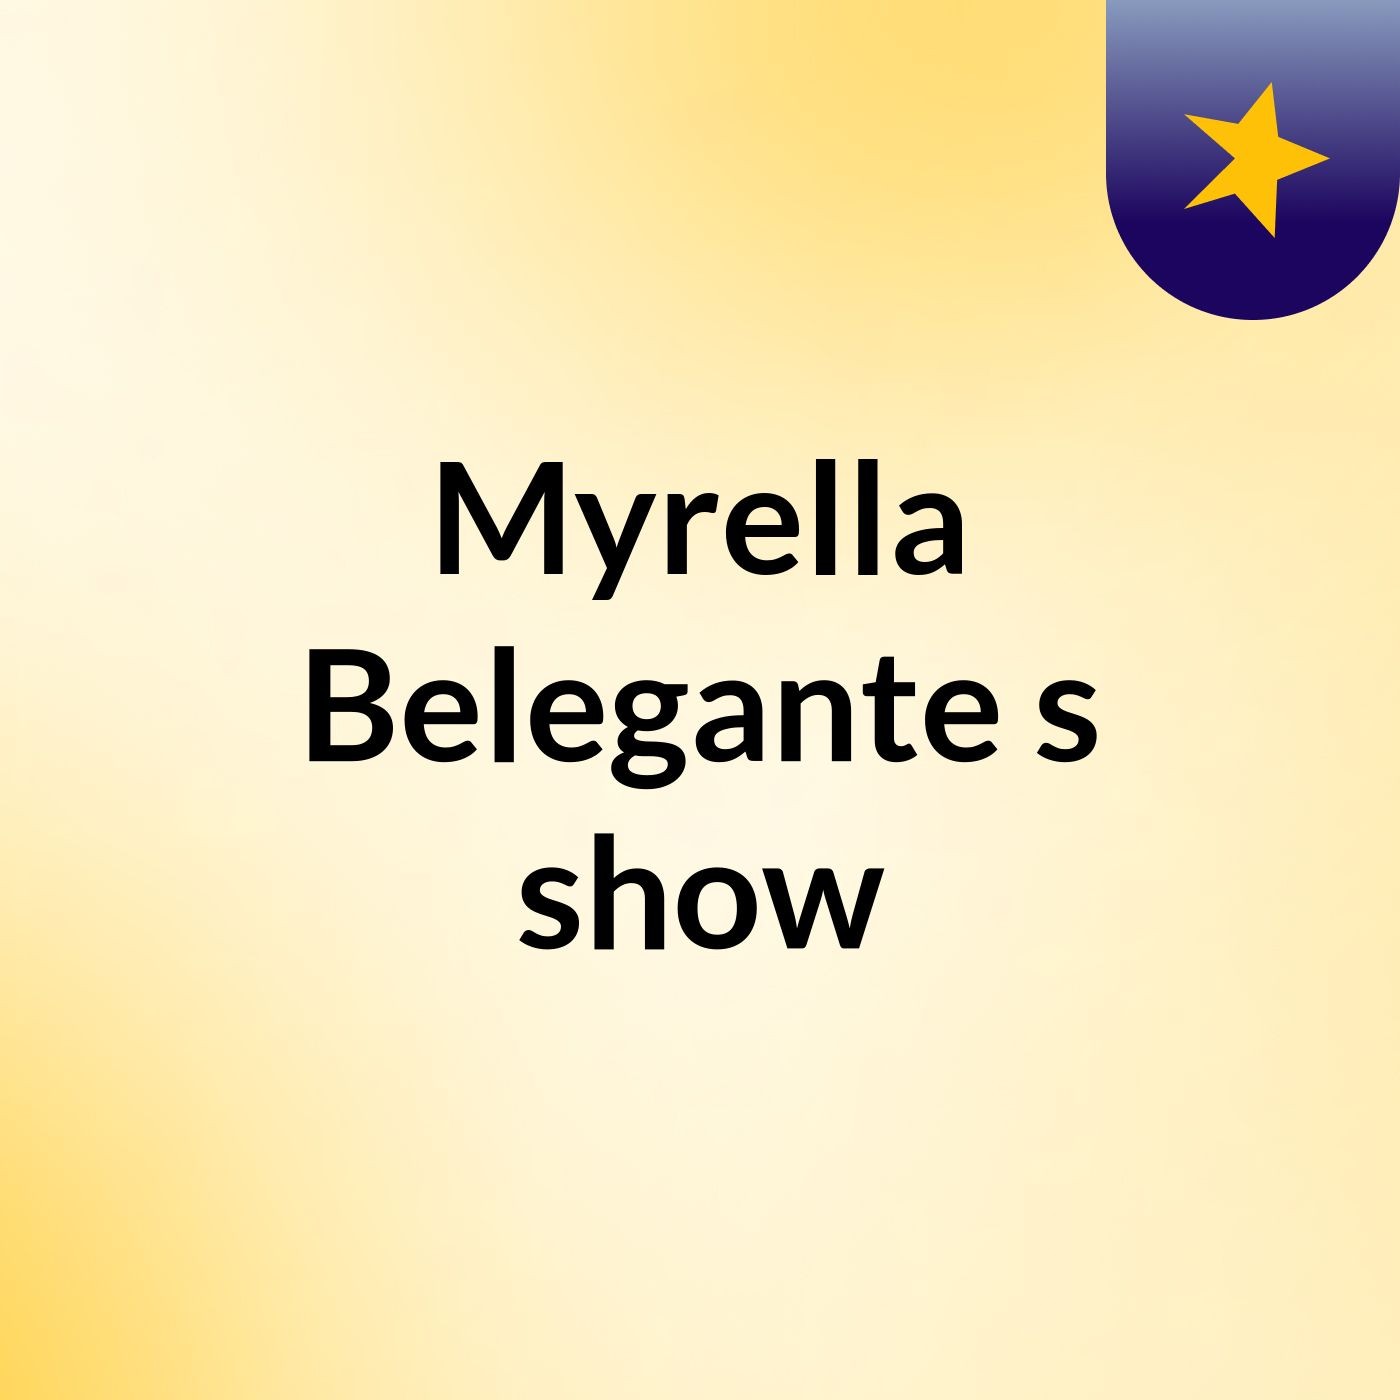 Myrella Belegante's show